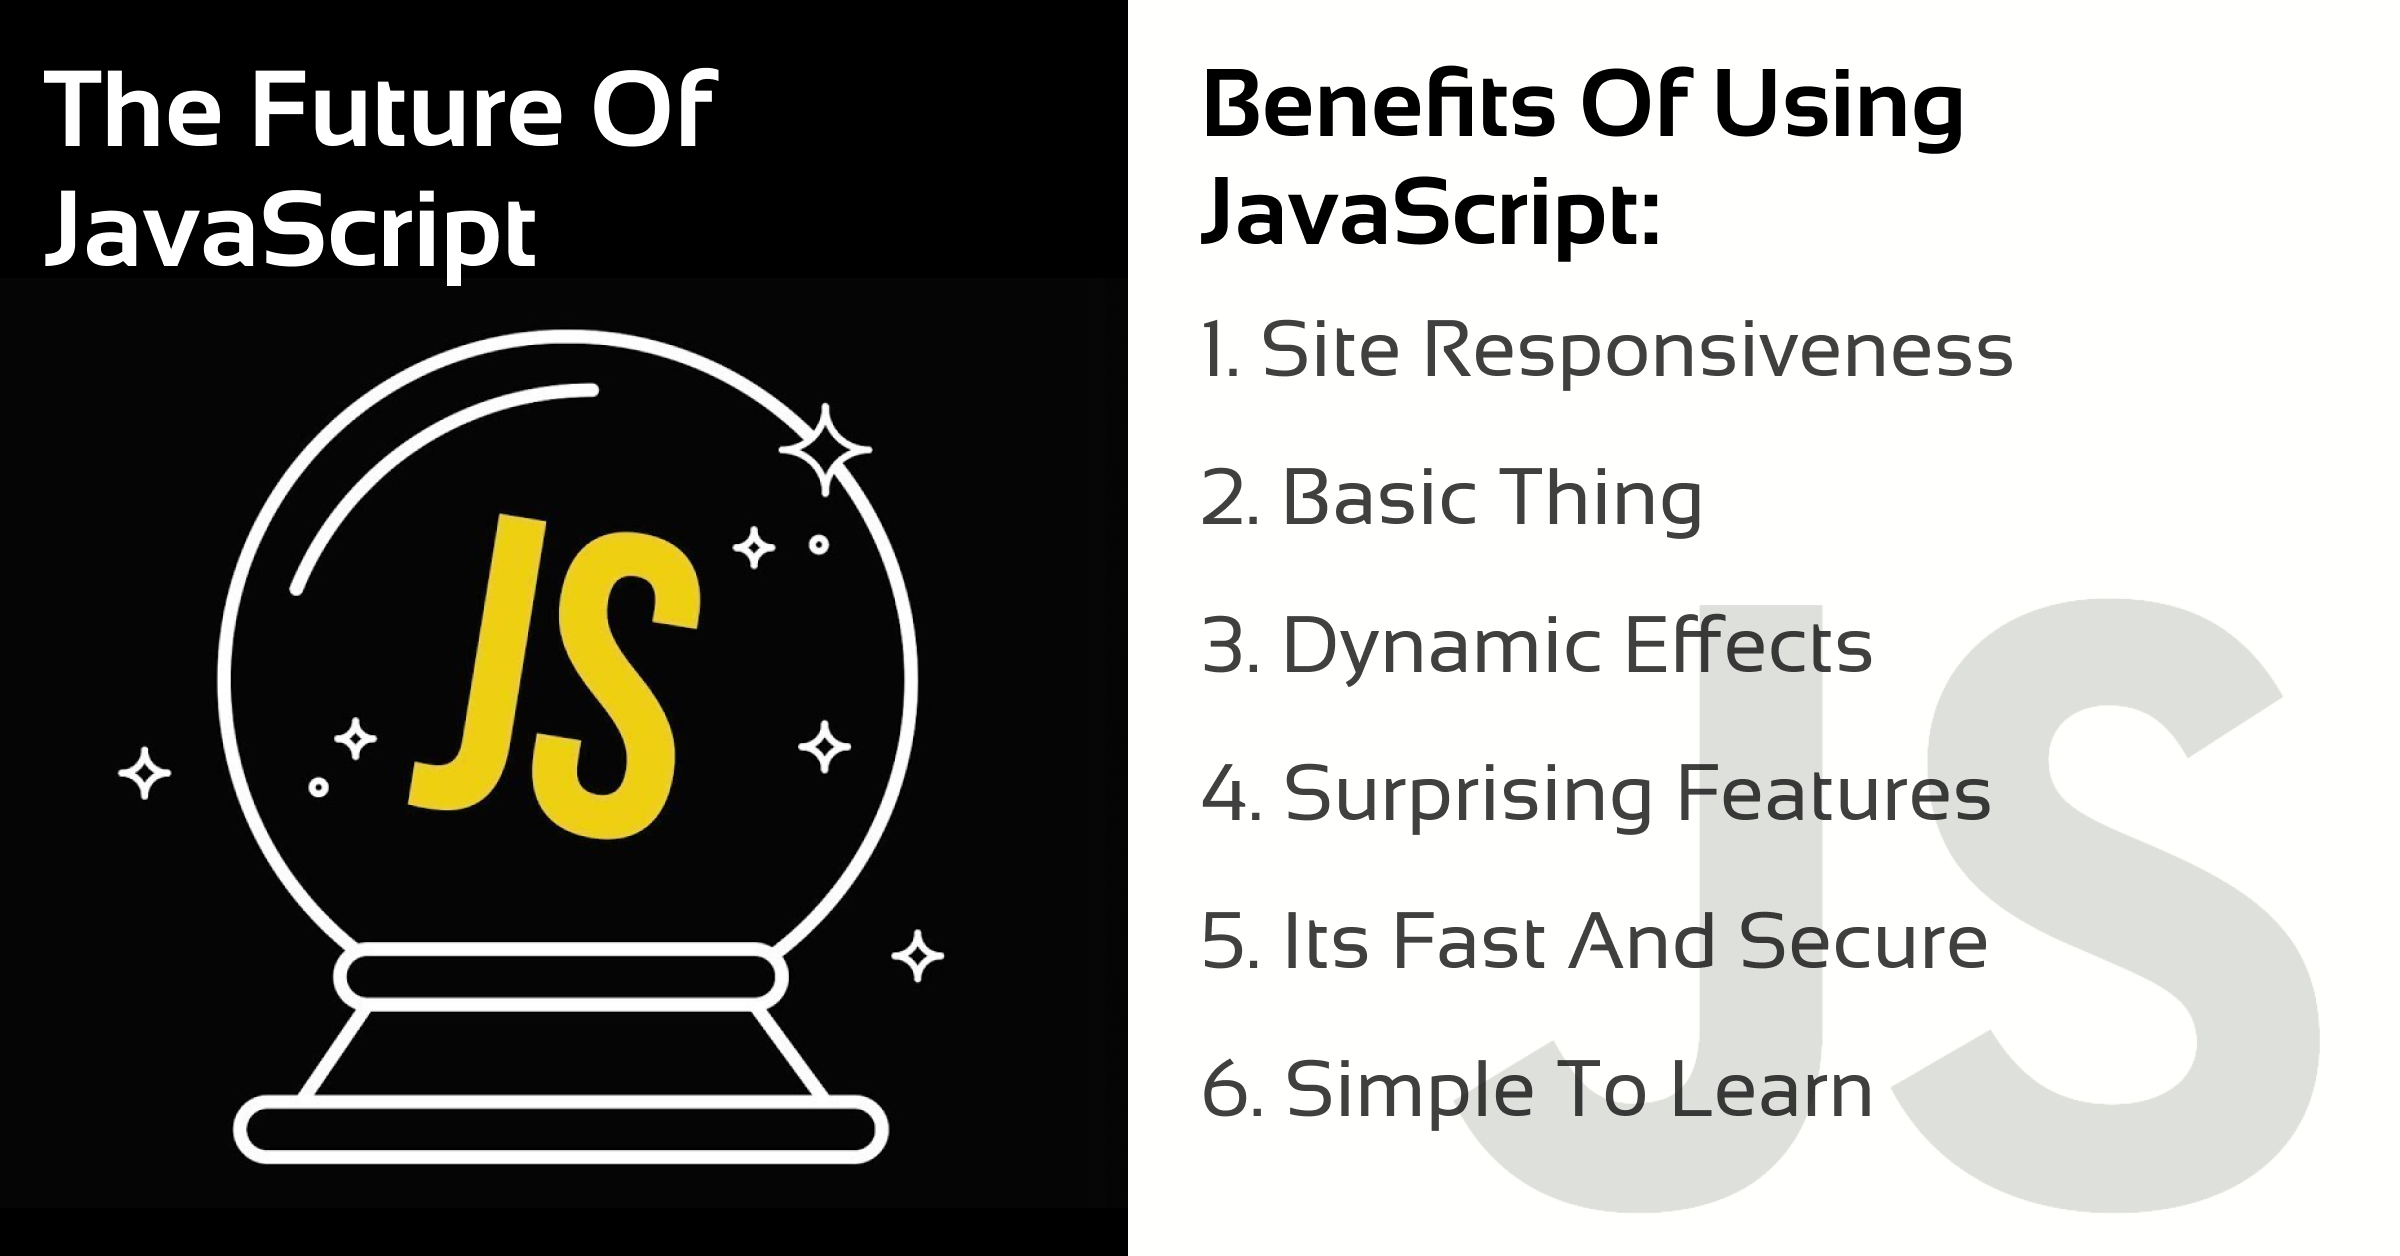 Benefits of Using JavaScript